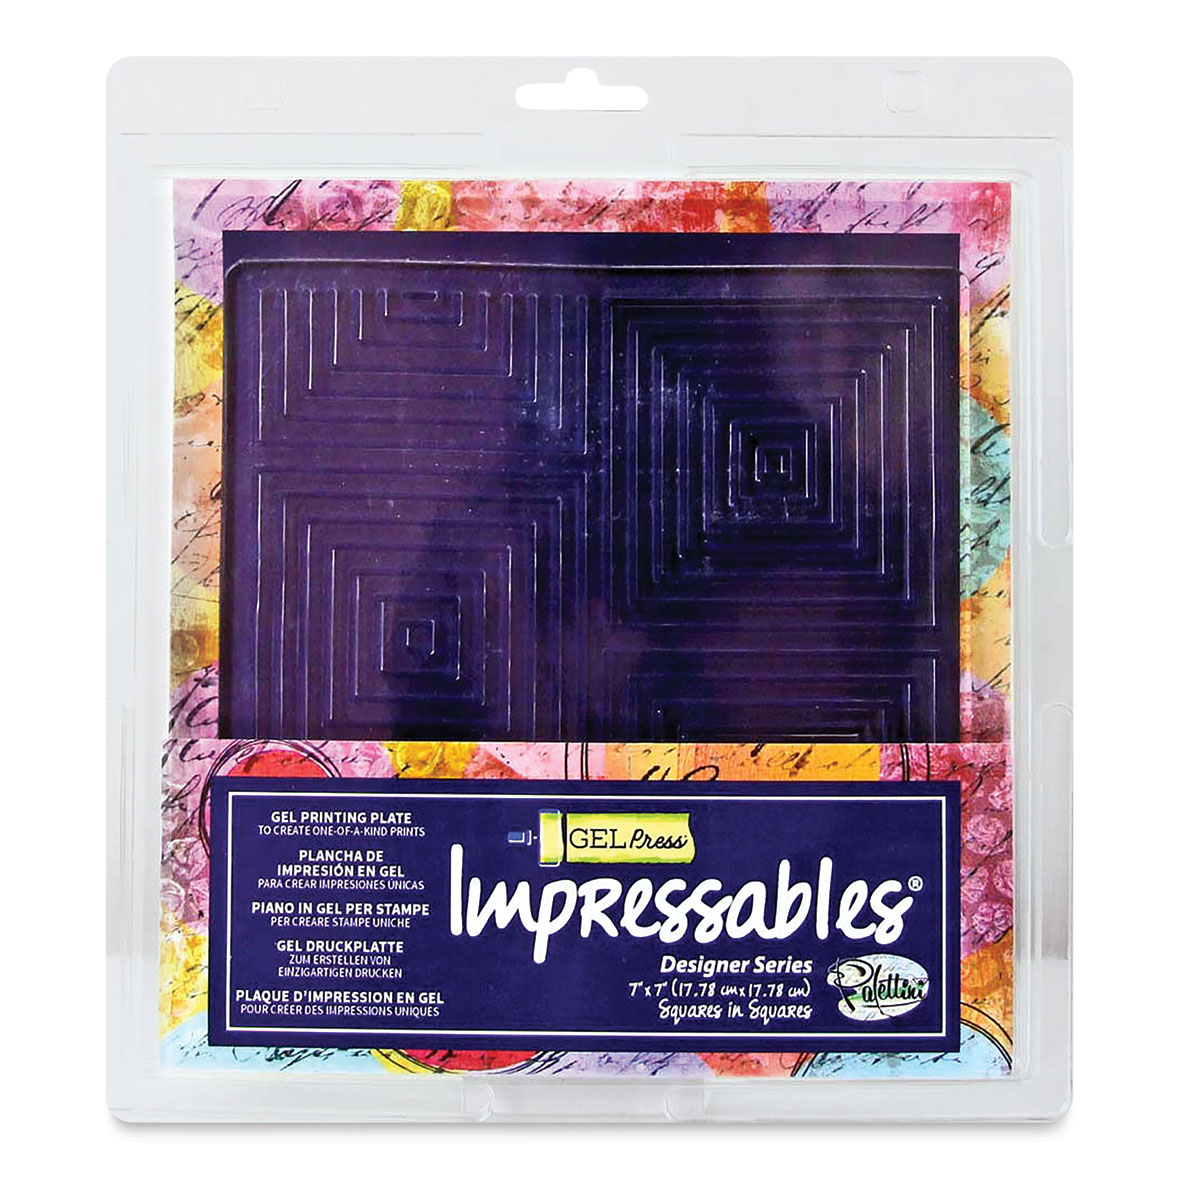 Gel Press Impressables - Squares in Squares, 7' x 7'